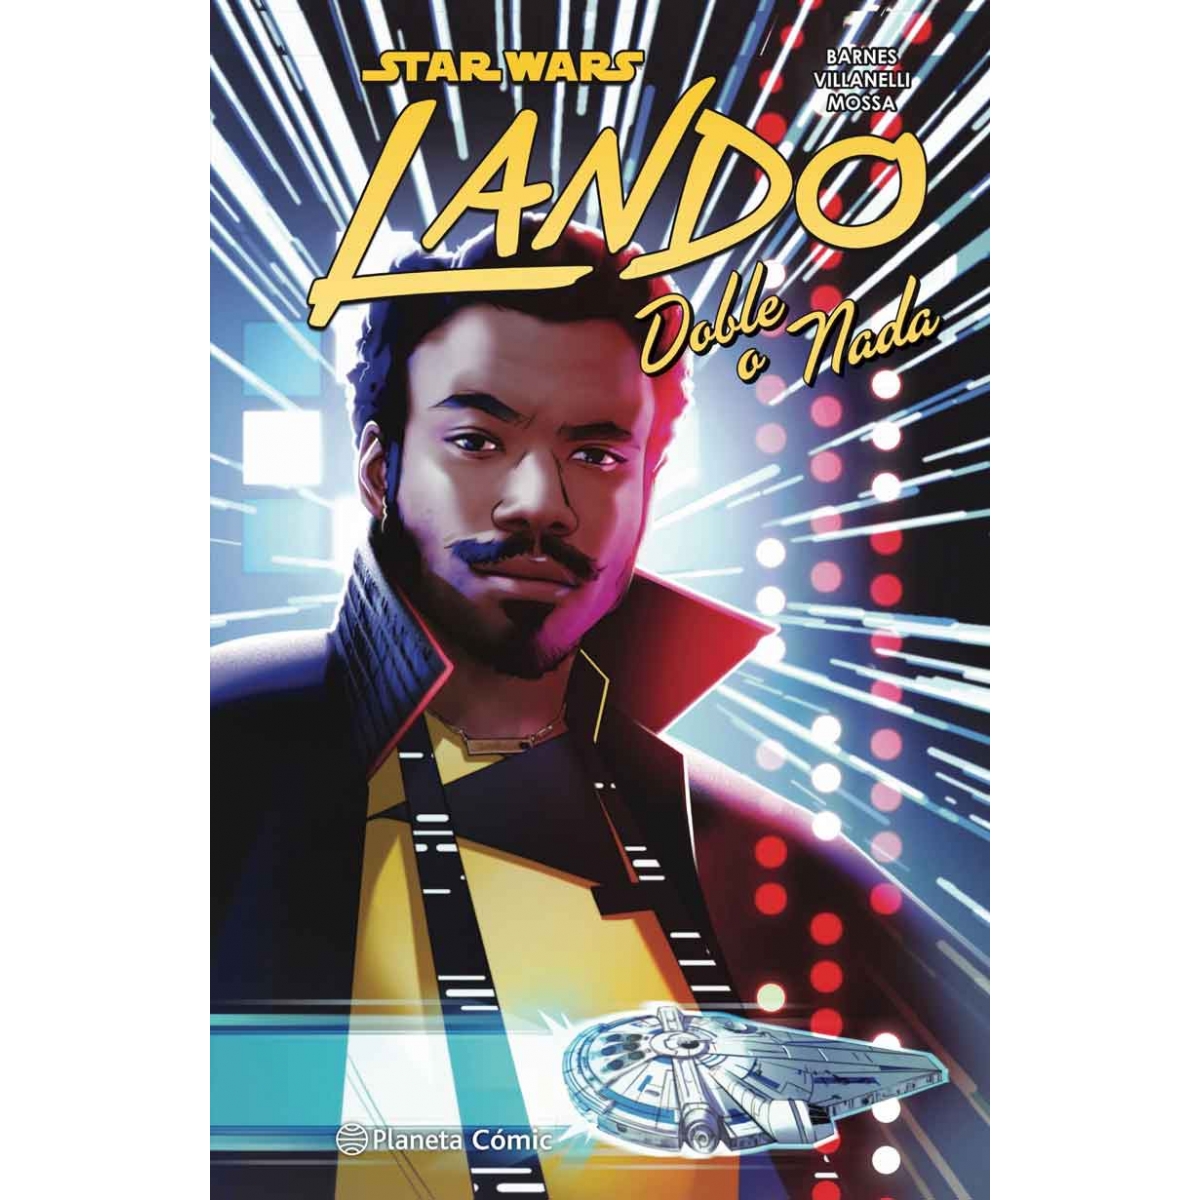 Star Wars Lando - Doble o Nada